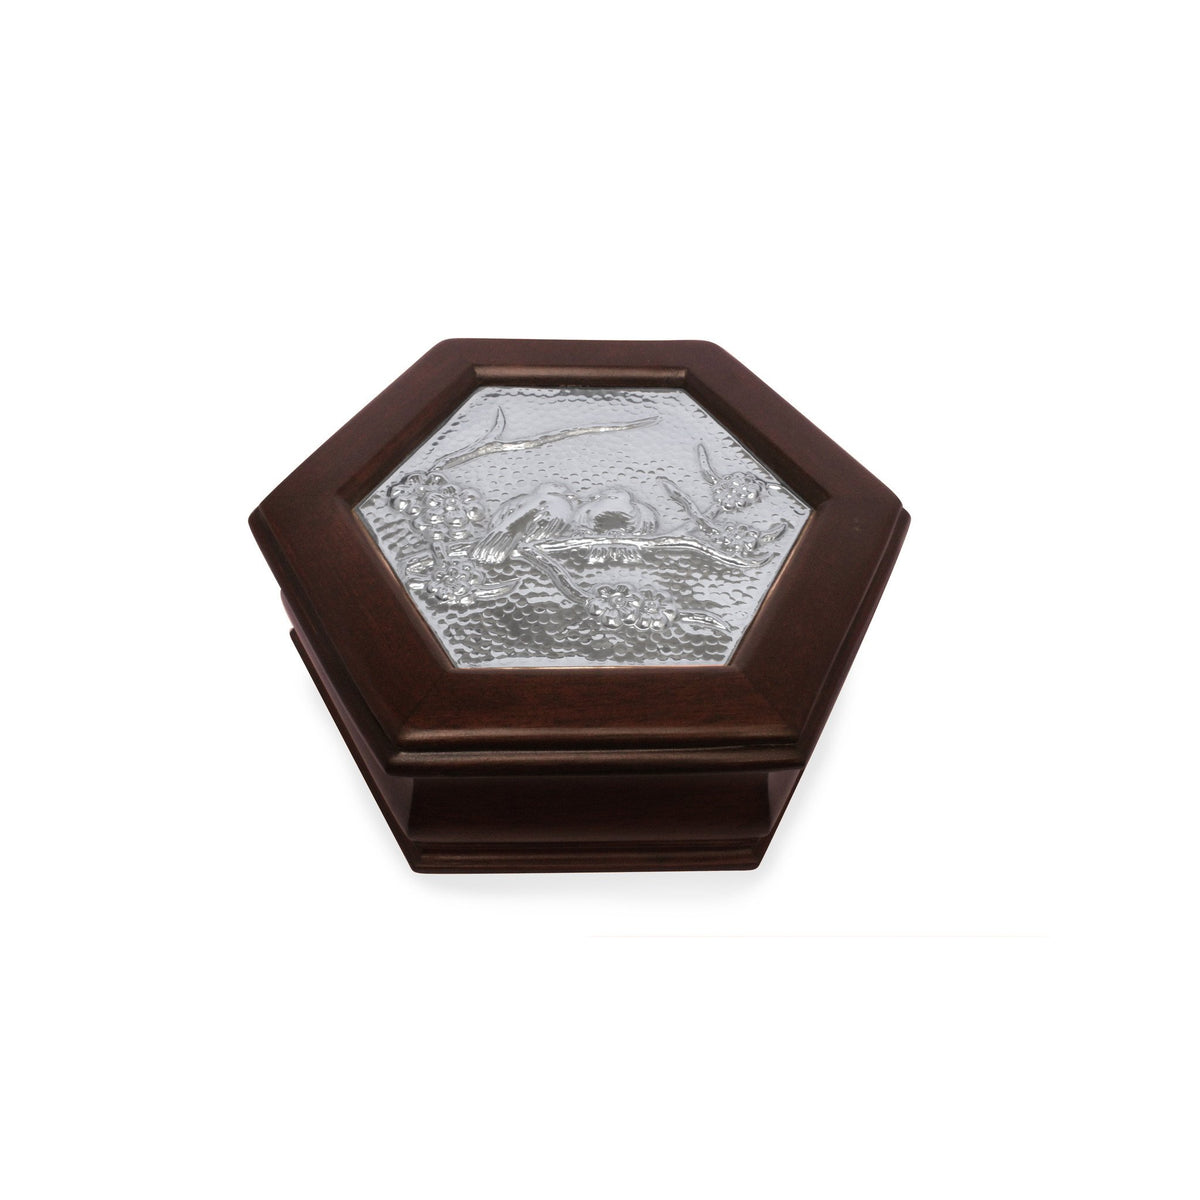 Hexagonal Keepsake Box with Sterling Silver Love Doves - Qinti - The Peruvian Shop